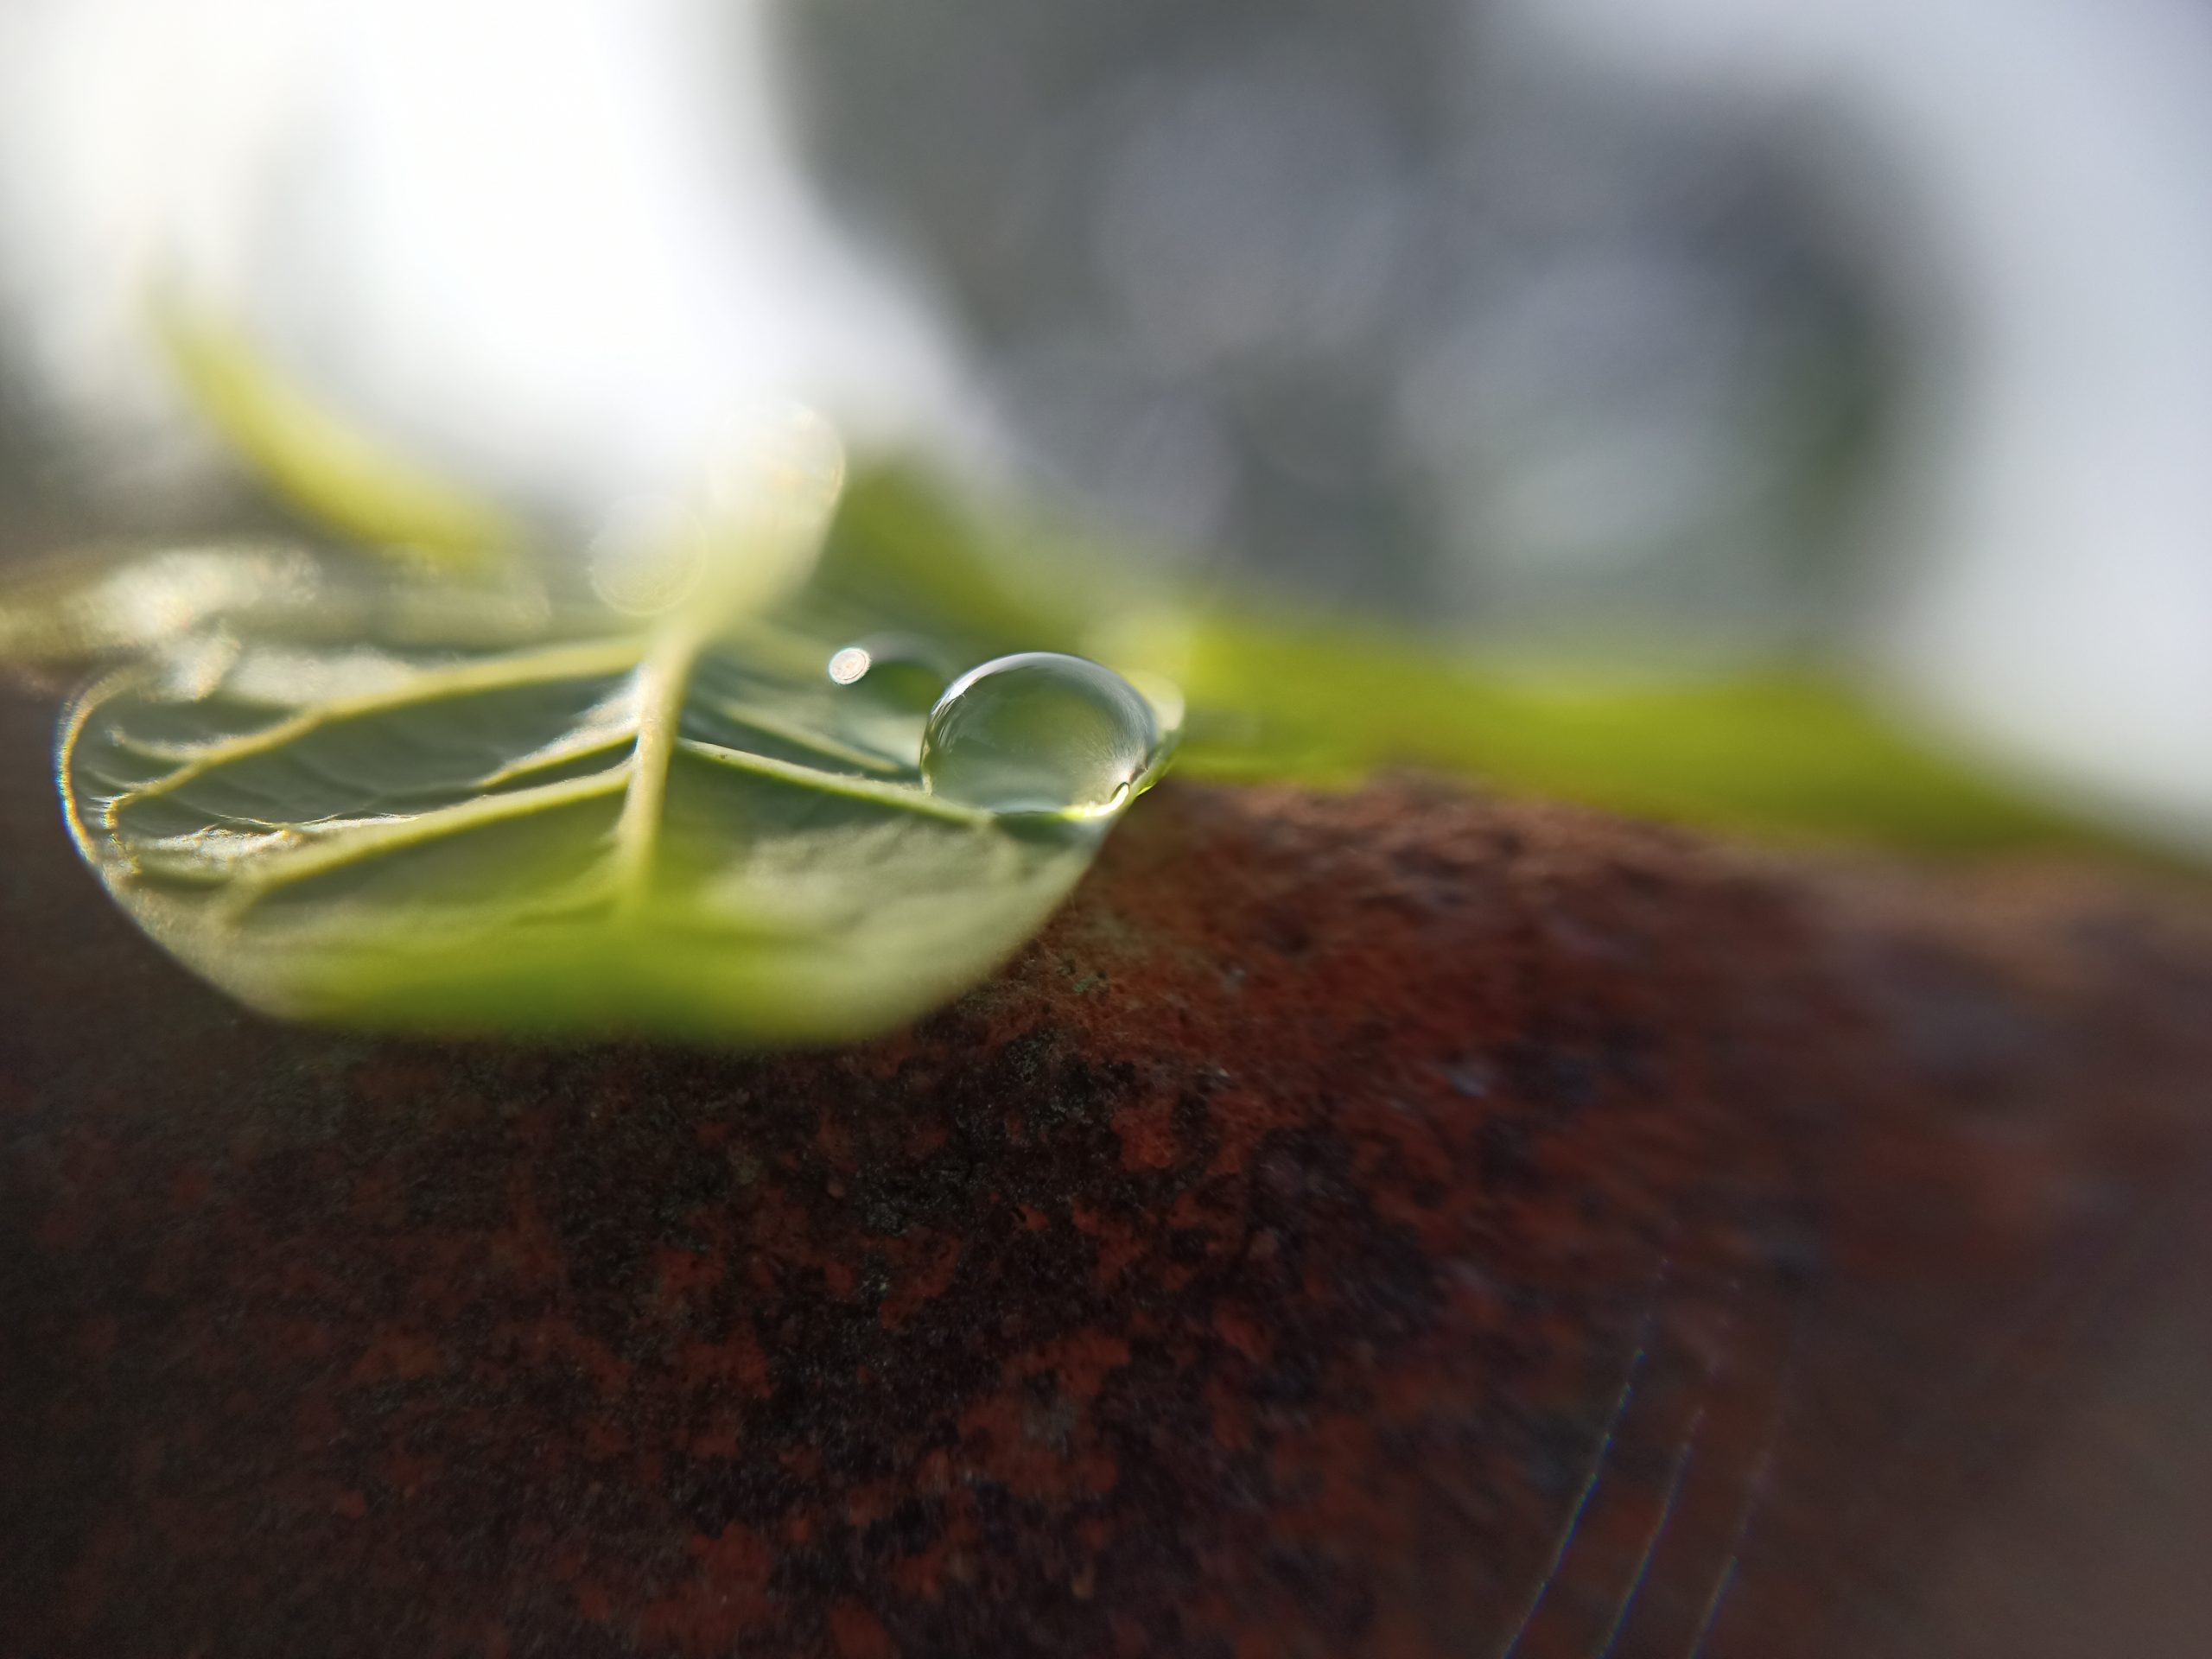 Drop on leaf